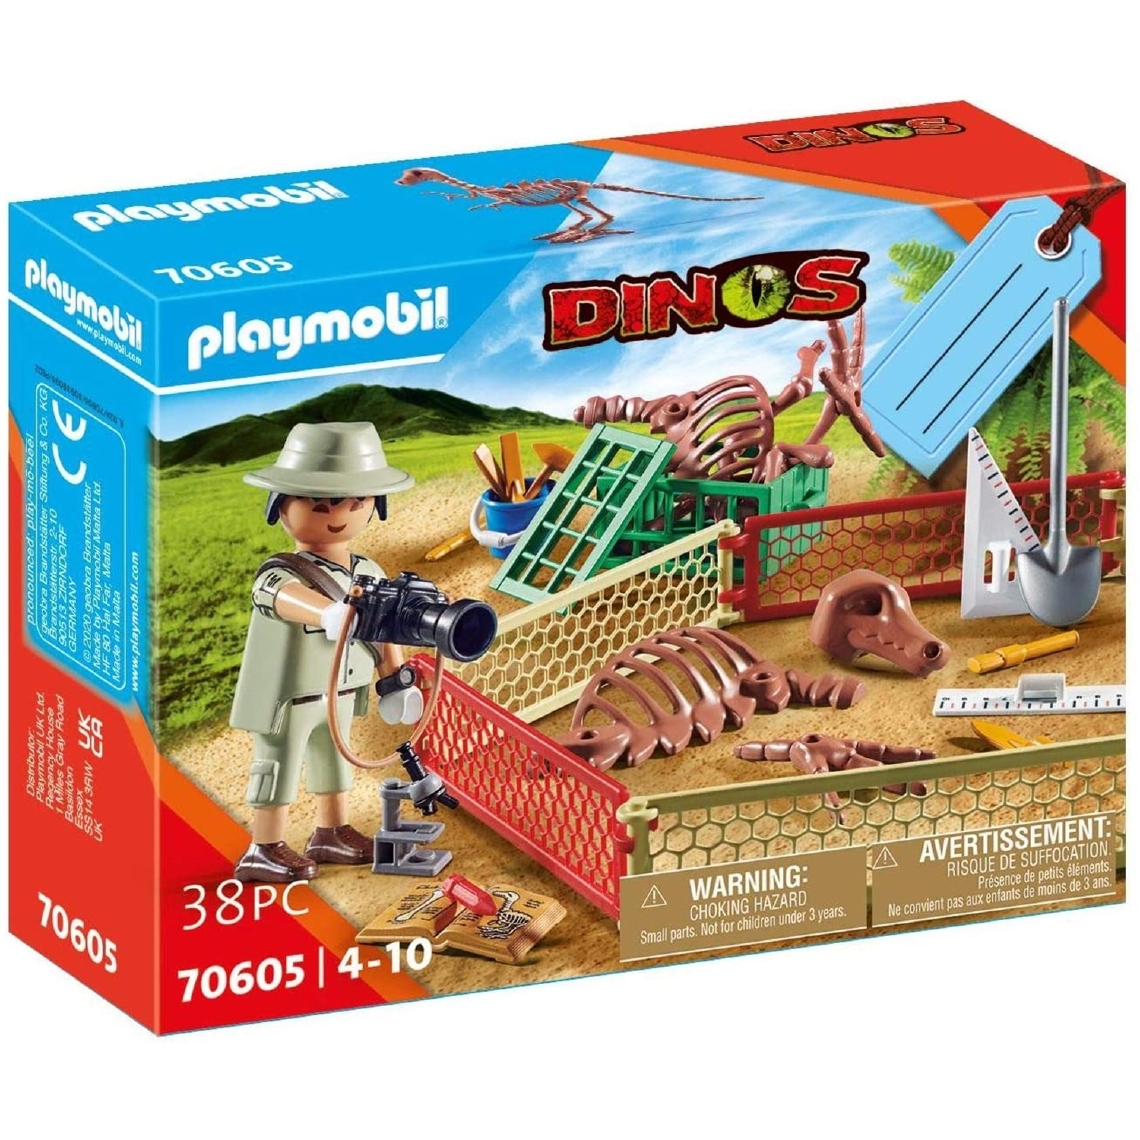 Playmobil - PLAYMOBIL 70605 - Dinos Paléontologue Coffret cadeau - Playmobil